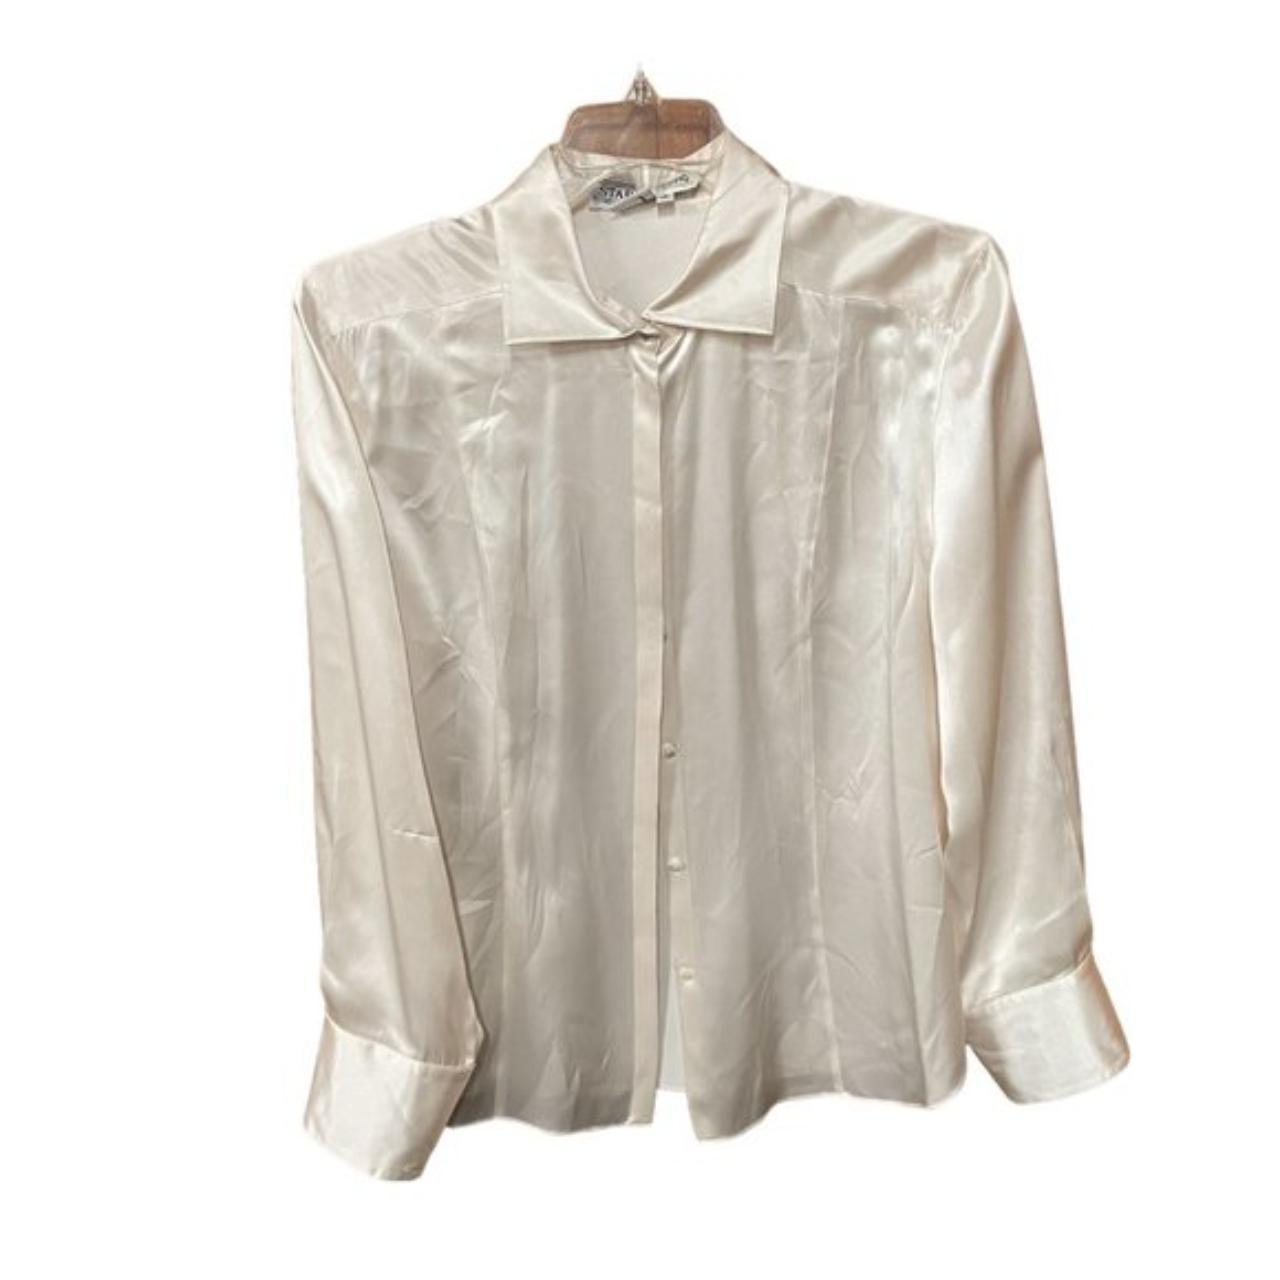 Vintage Starington Satin 100% Silk Blouse Size 16... - Depop